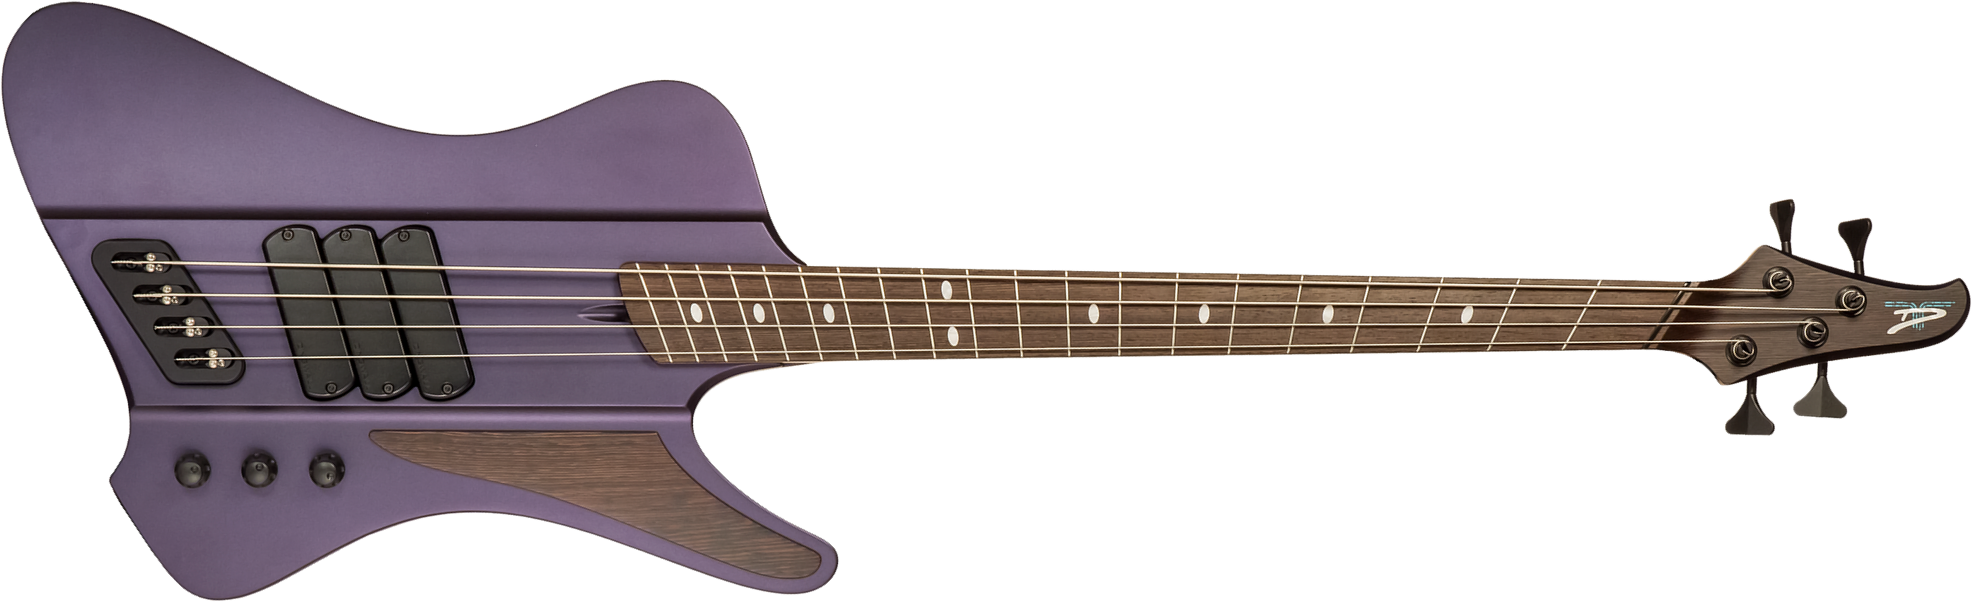 Dingwall Custom Shop D-roc 4c 3-pickups Wen #6982 - Purple To Faded Black - Basse Électrique Solid Body - Main picture